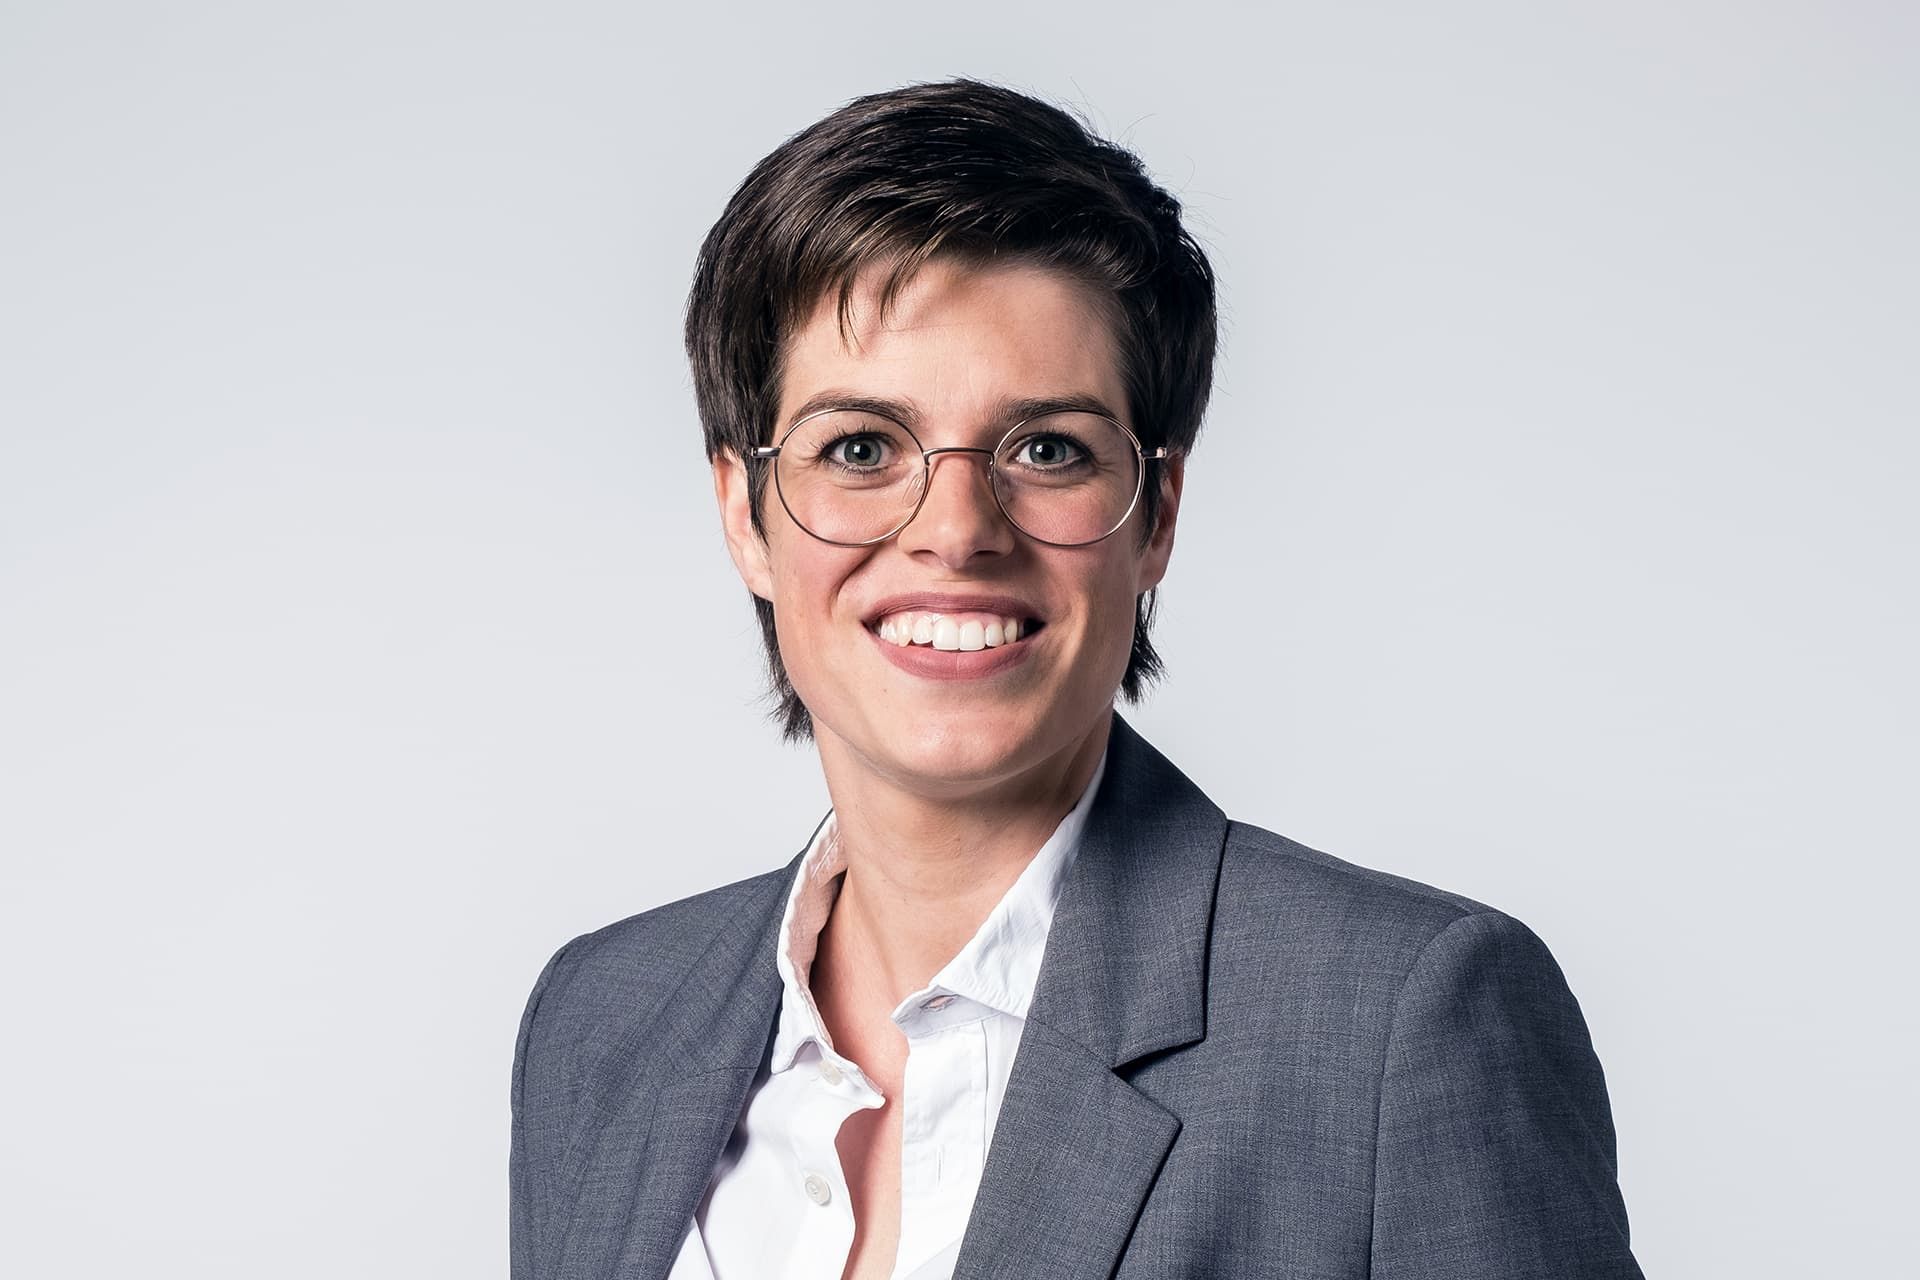 Petra Schmidt博士はZEISS Industrial Quality SolutionsのX線事業責任者です。